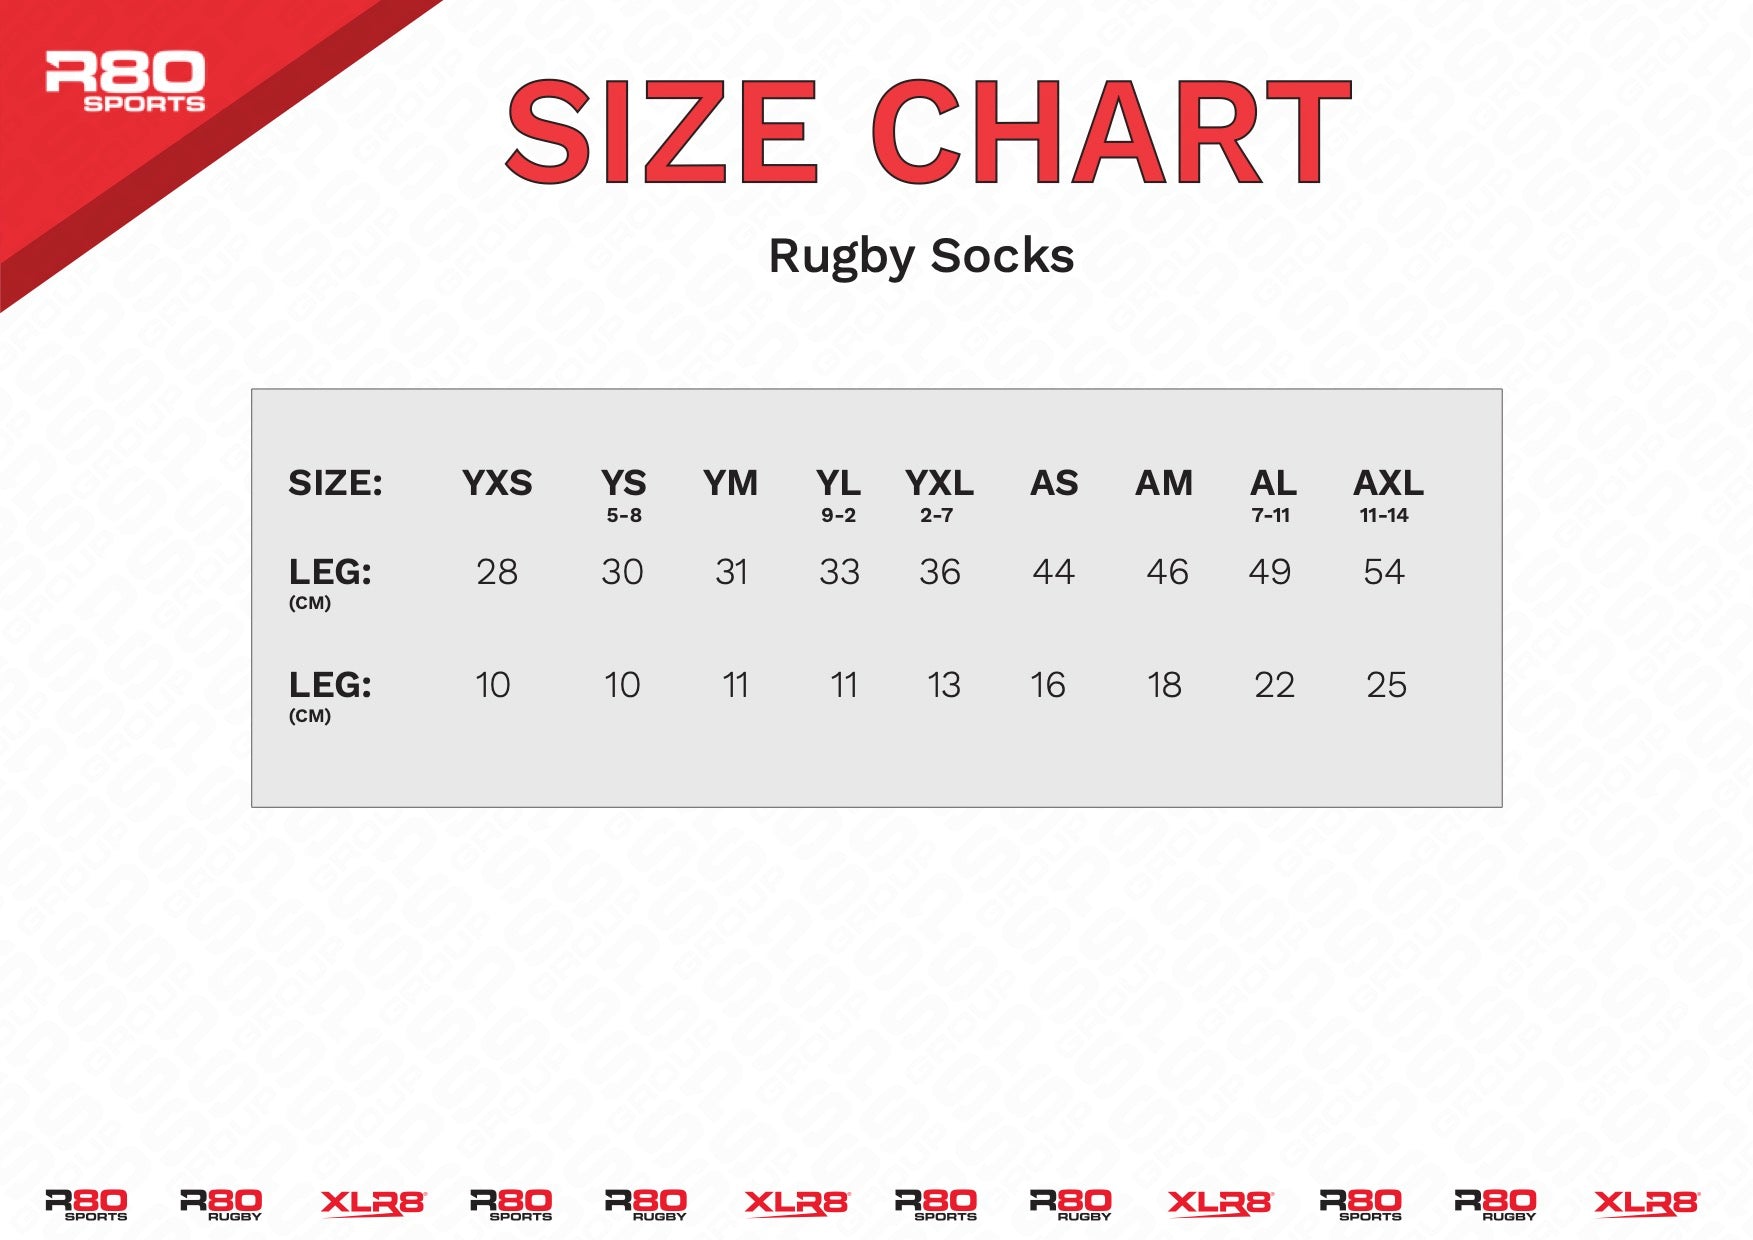 Methven RFC - Club Rugby Socks - R80 Rugby